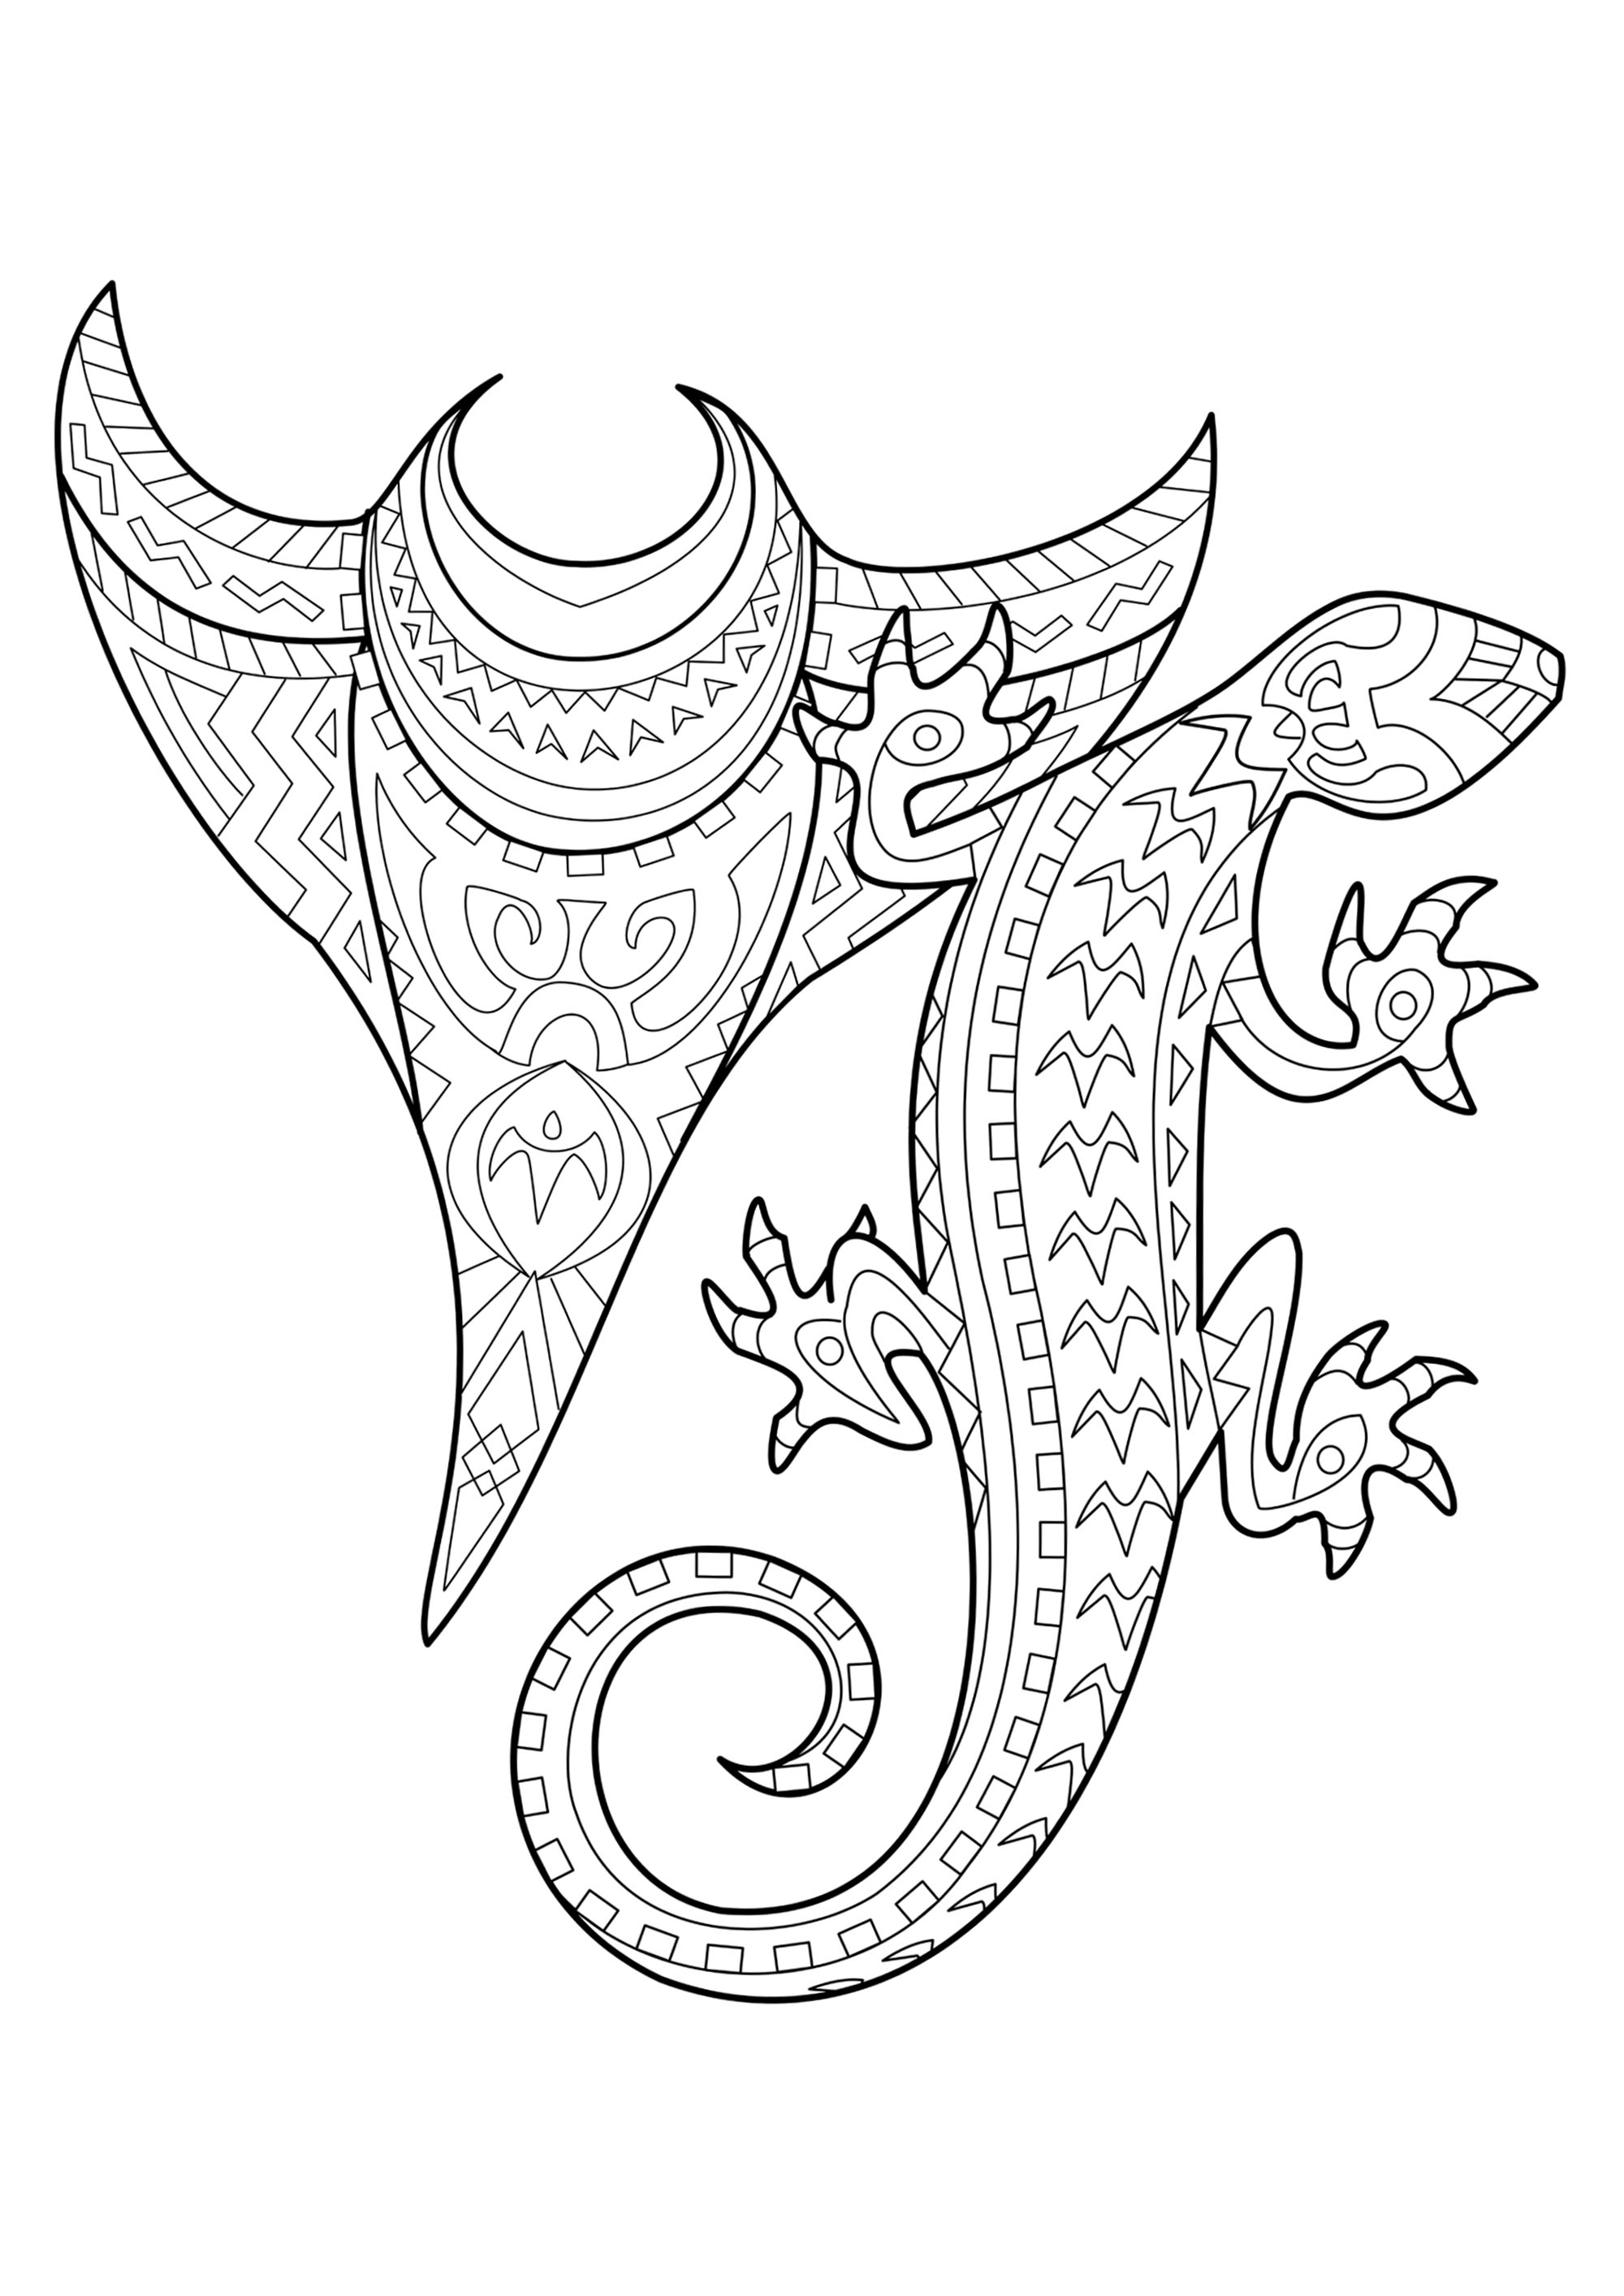 Tatouage Polynesien : Nga tama p Punga. Coloriage issu du livre Polynesian Tattoos : 42 Modern Tribal Designs to Color and Explore par l'artiste italien Roberto “Gi. Erre” Gemori.A découvrir ici : www.shambhala.com/polynesian-tattoos.html Site de l'artiste : Tattootribes.com, Artiste : Roberto “Gi. Erre” Gemori